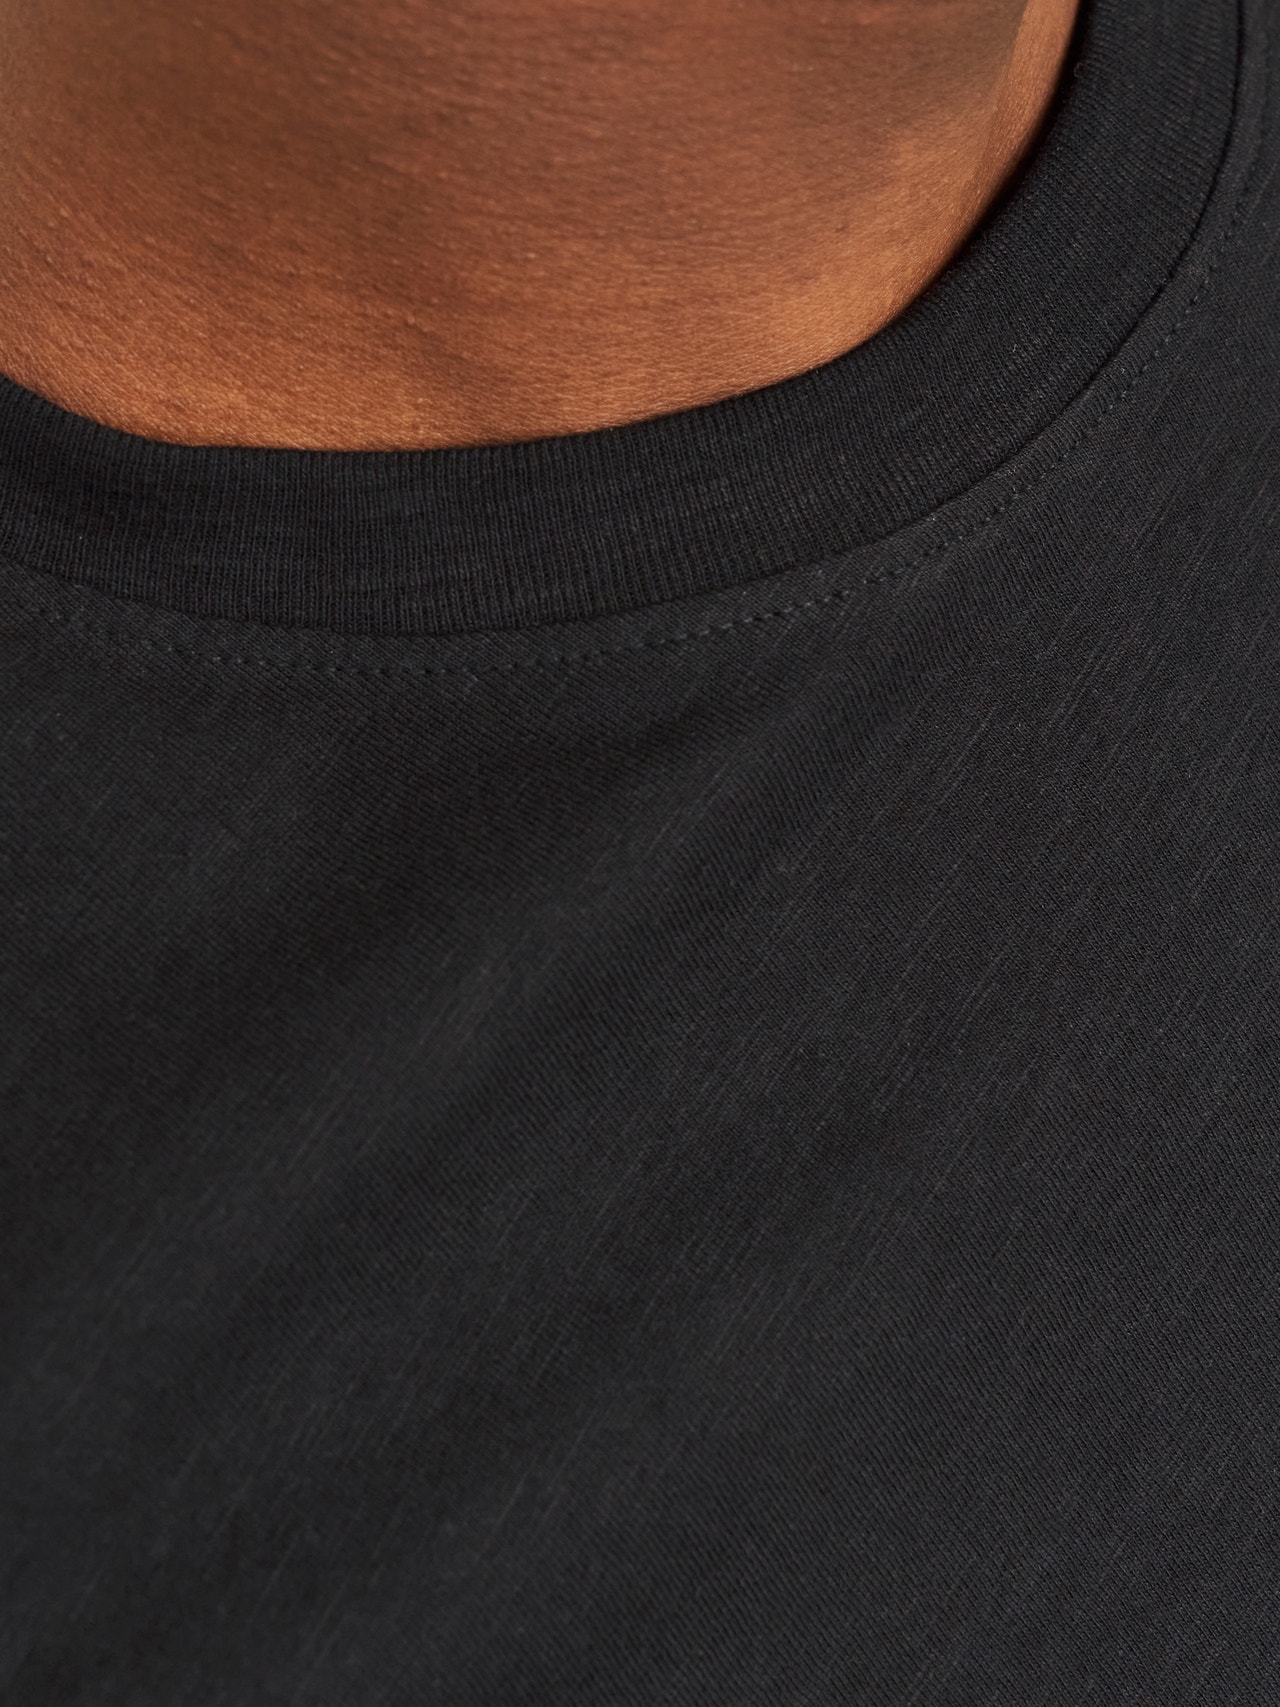 Jack & Jones Camiseta Estampado Cuello redondo -Black - 12255452